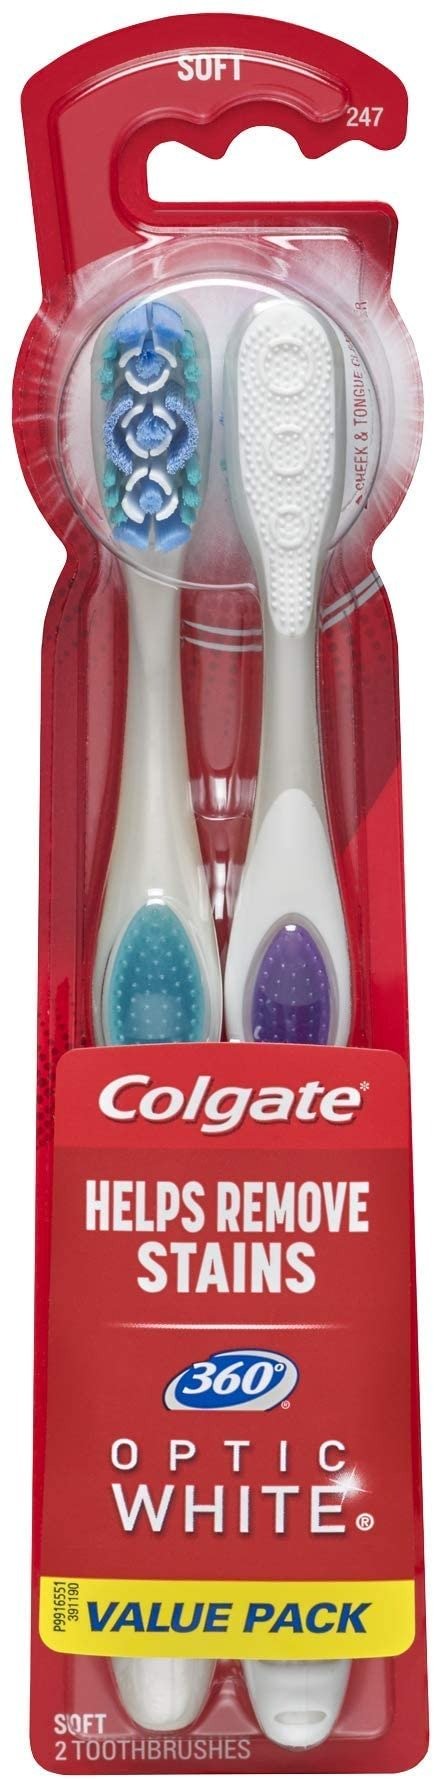 360 Optic White Whitening Toothbrush, Soft - 2 Count